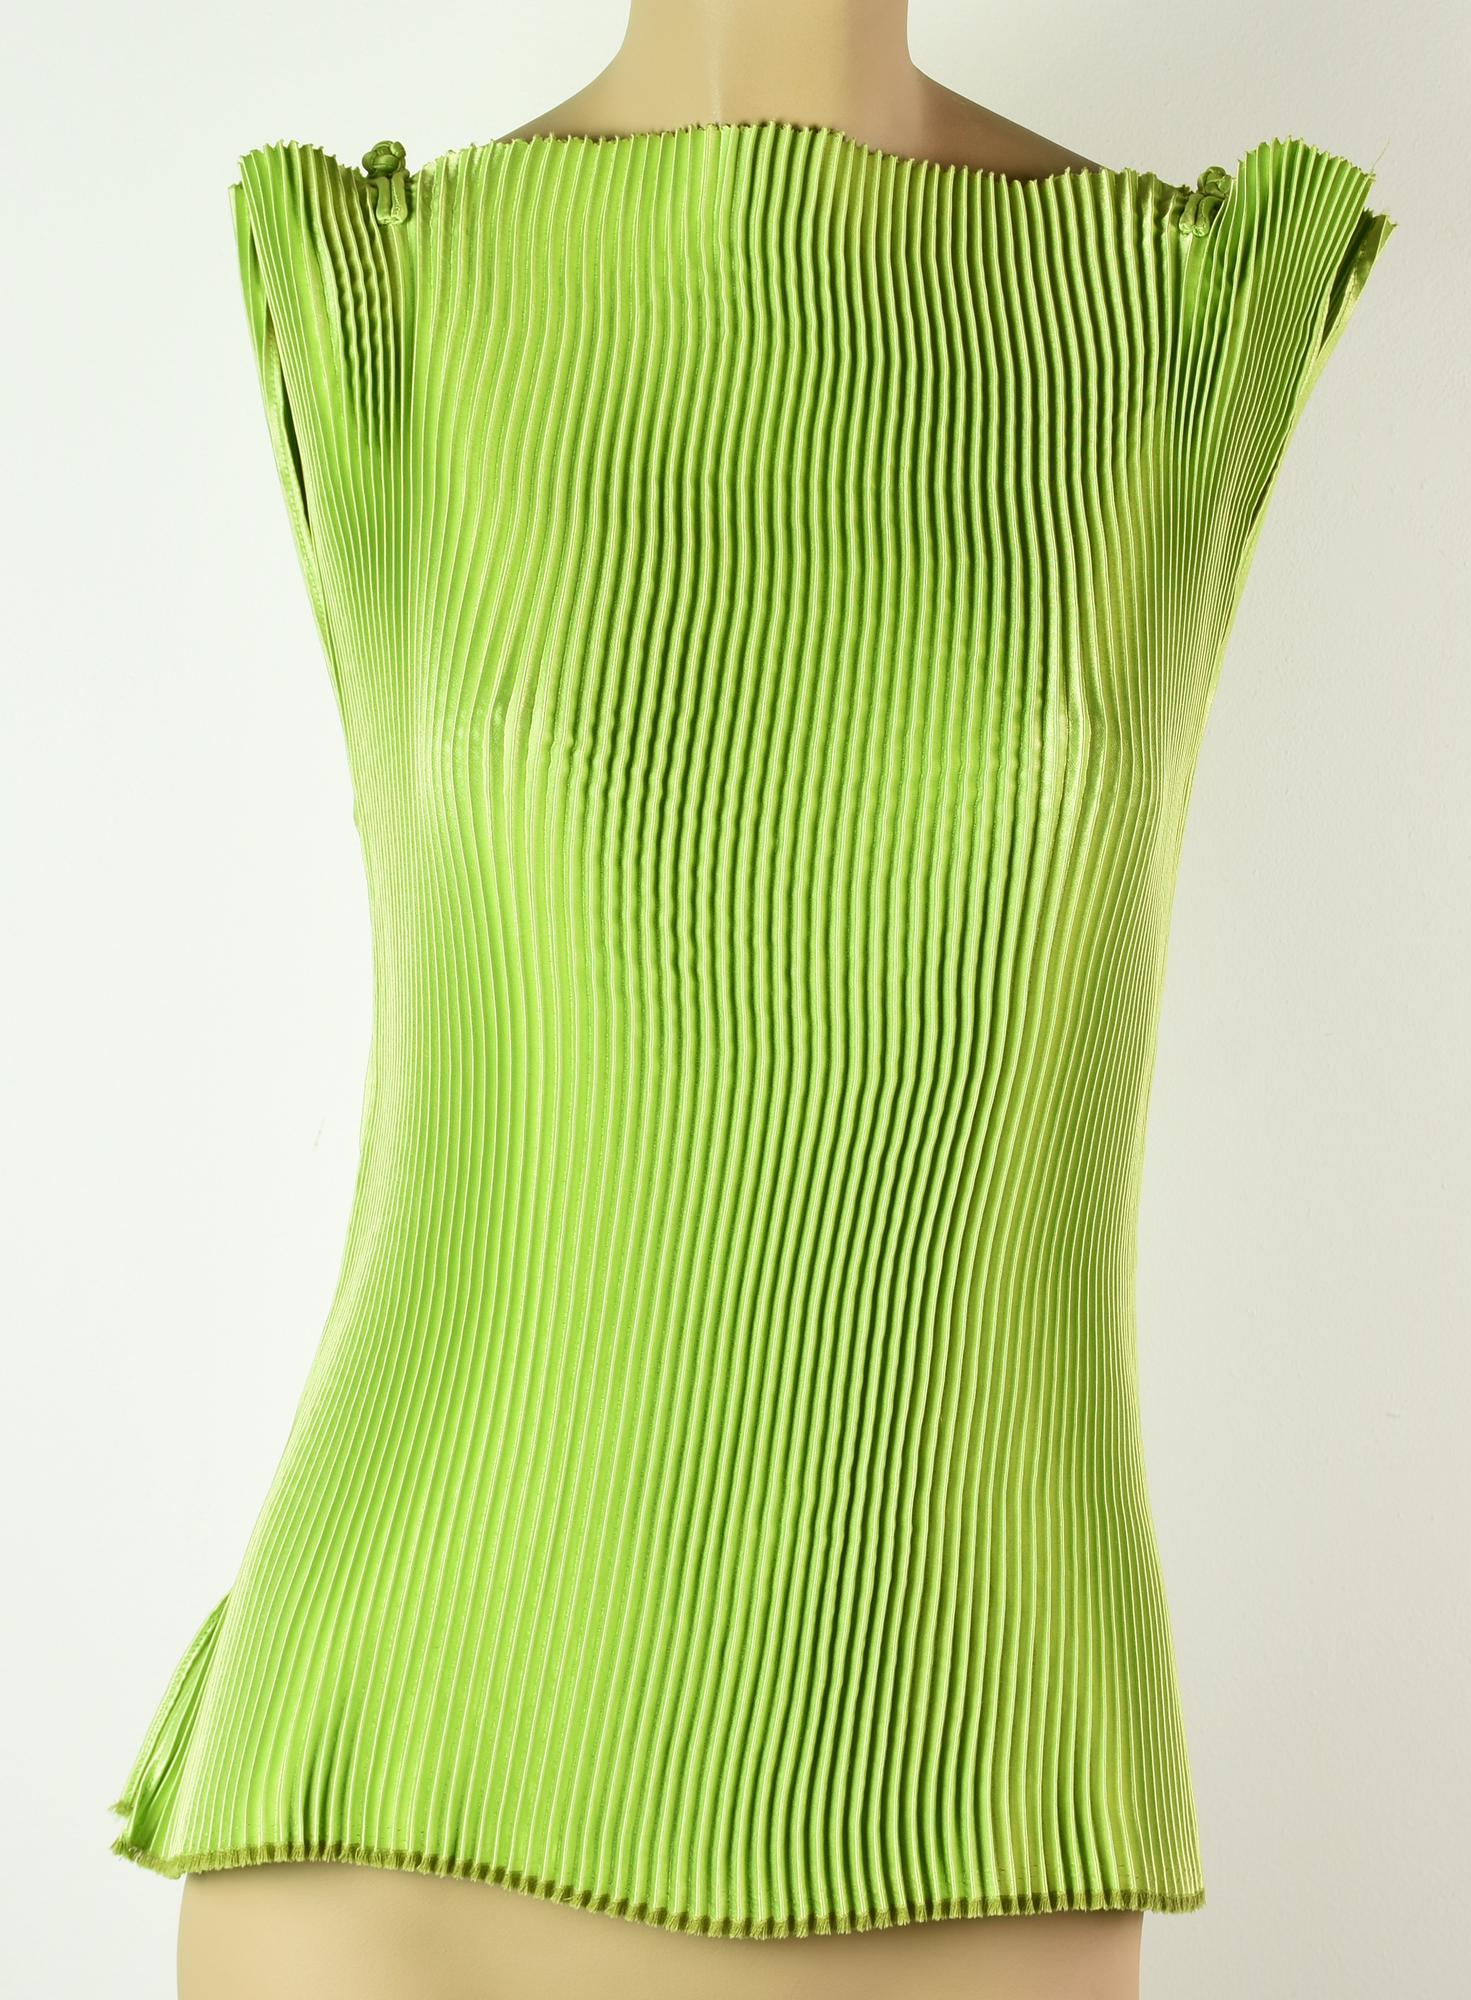 Nagara for Jim Thompson PLEATED TOP Description: Green sleeveless silk top....